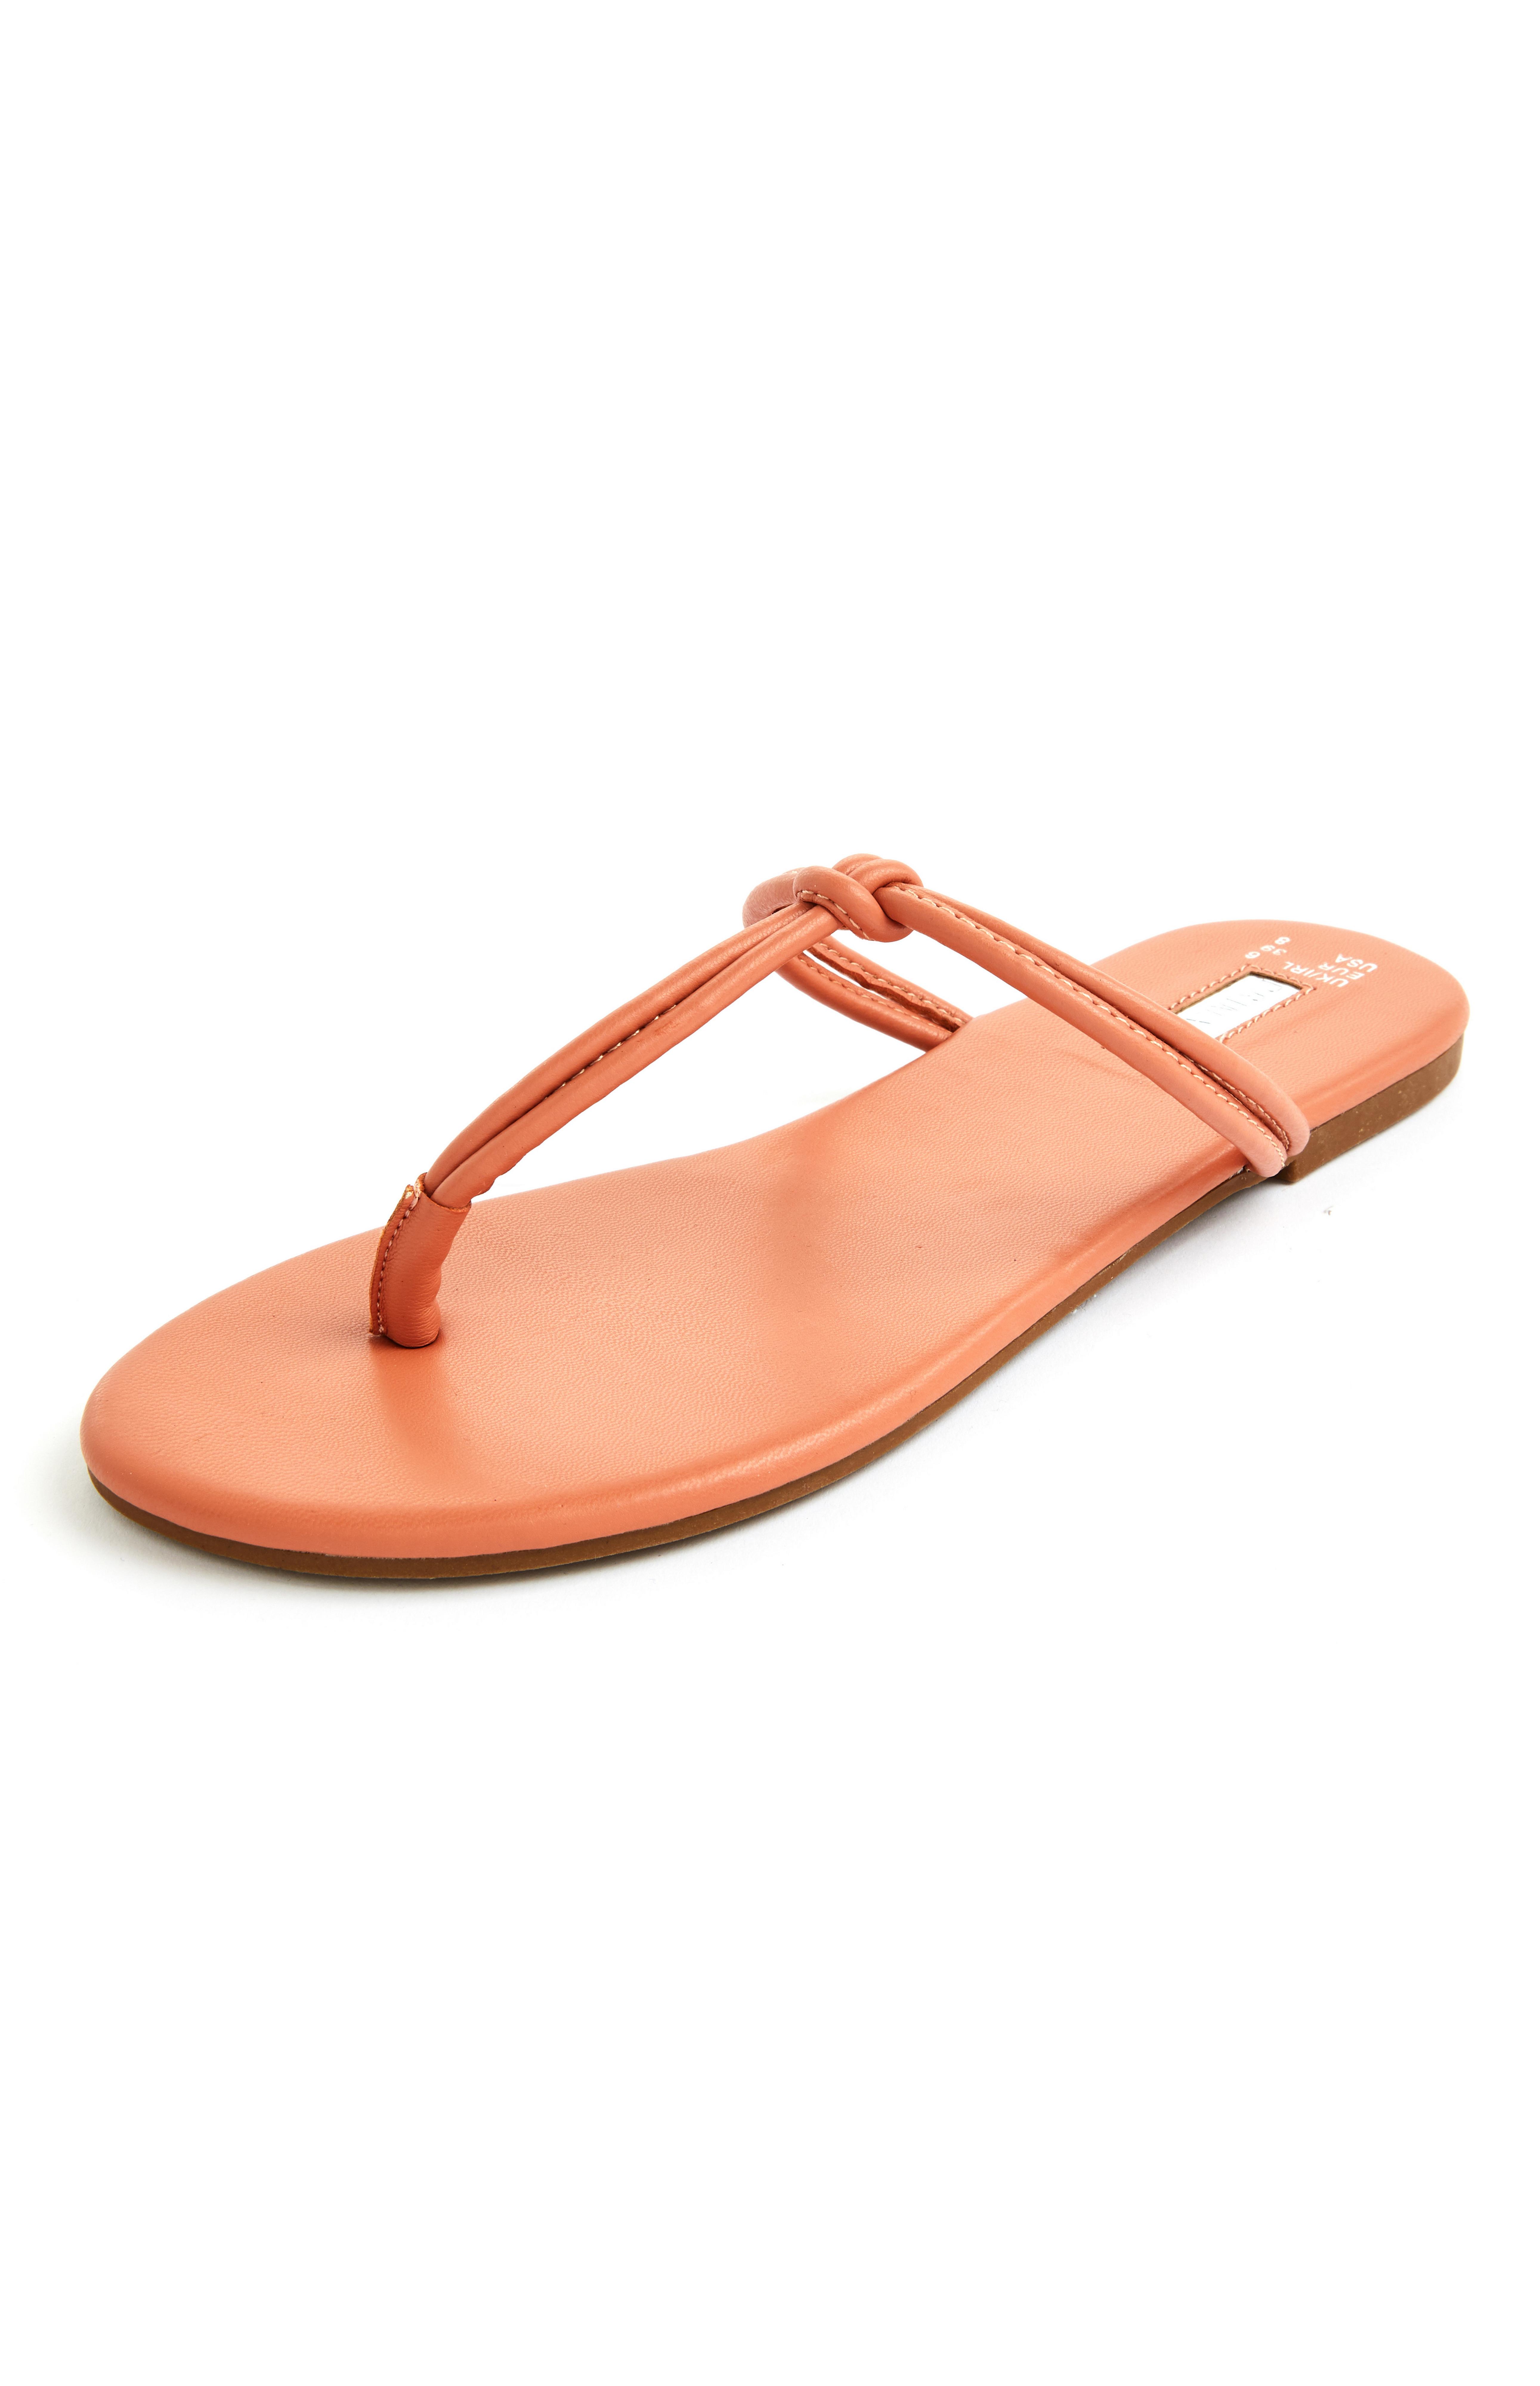 Orange Knotted Thong Sandals | Women's Sandals, Flip Flops & Mules | Women's Shoes & Boots | Our 